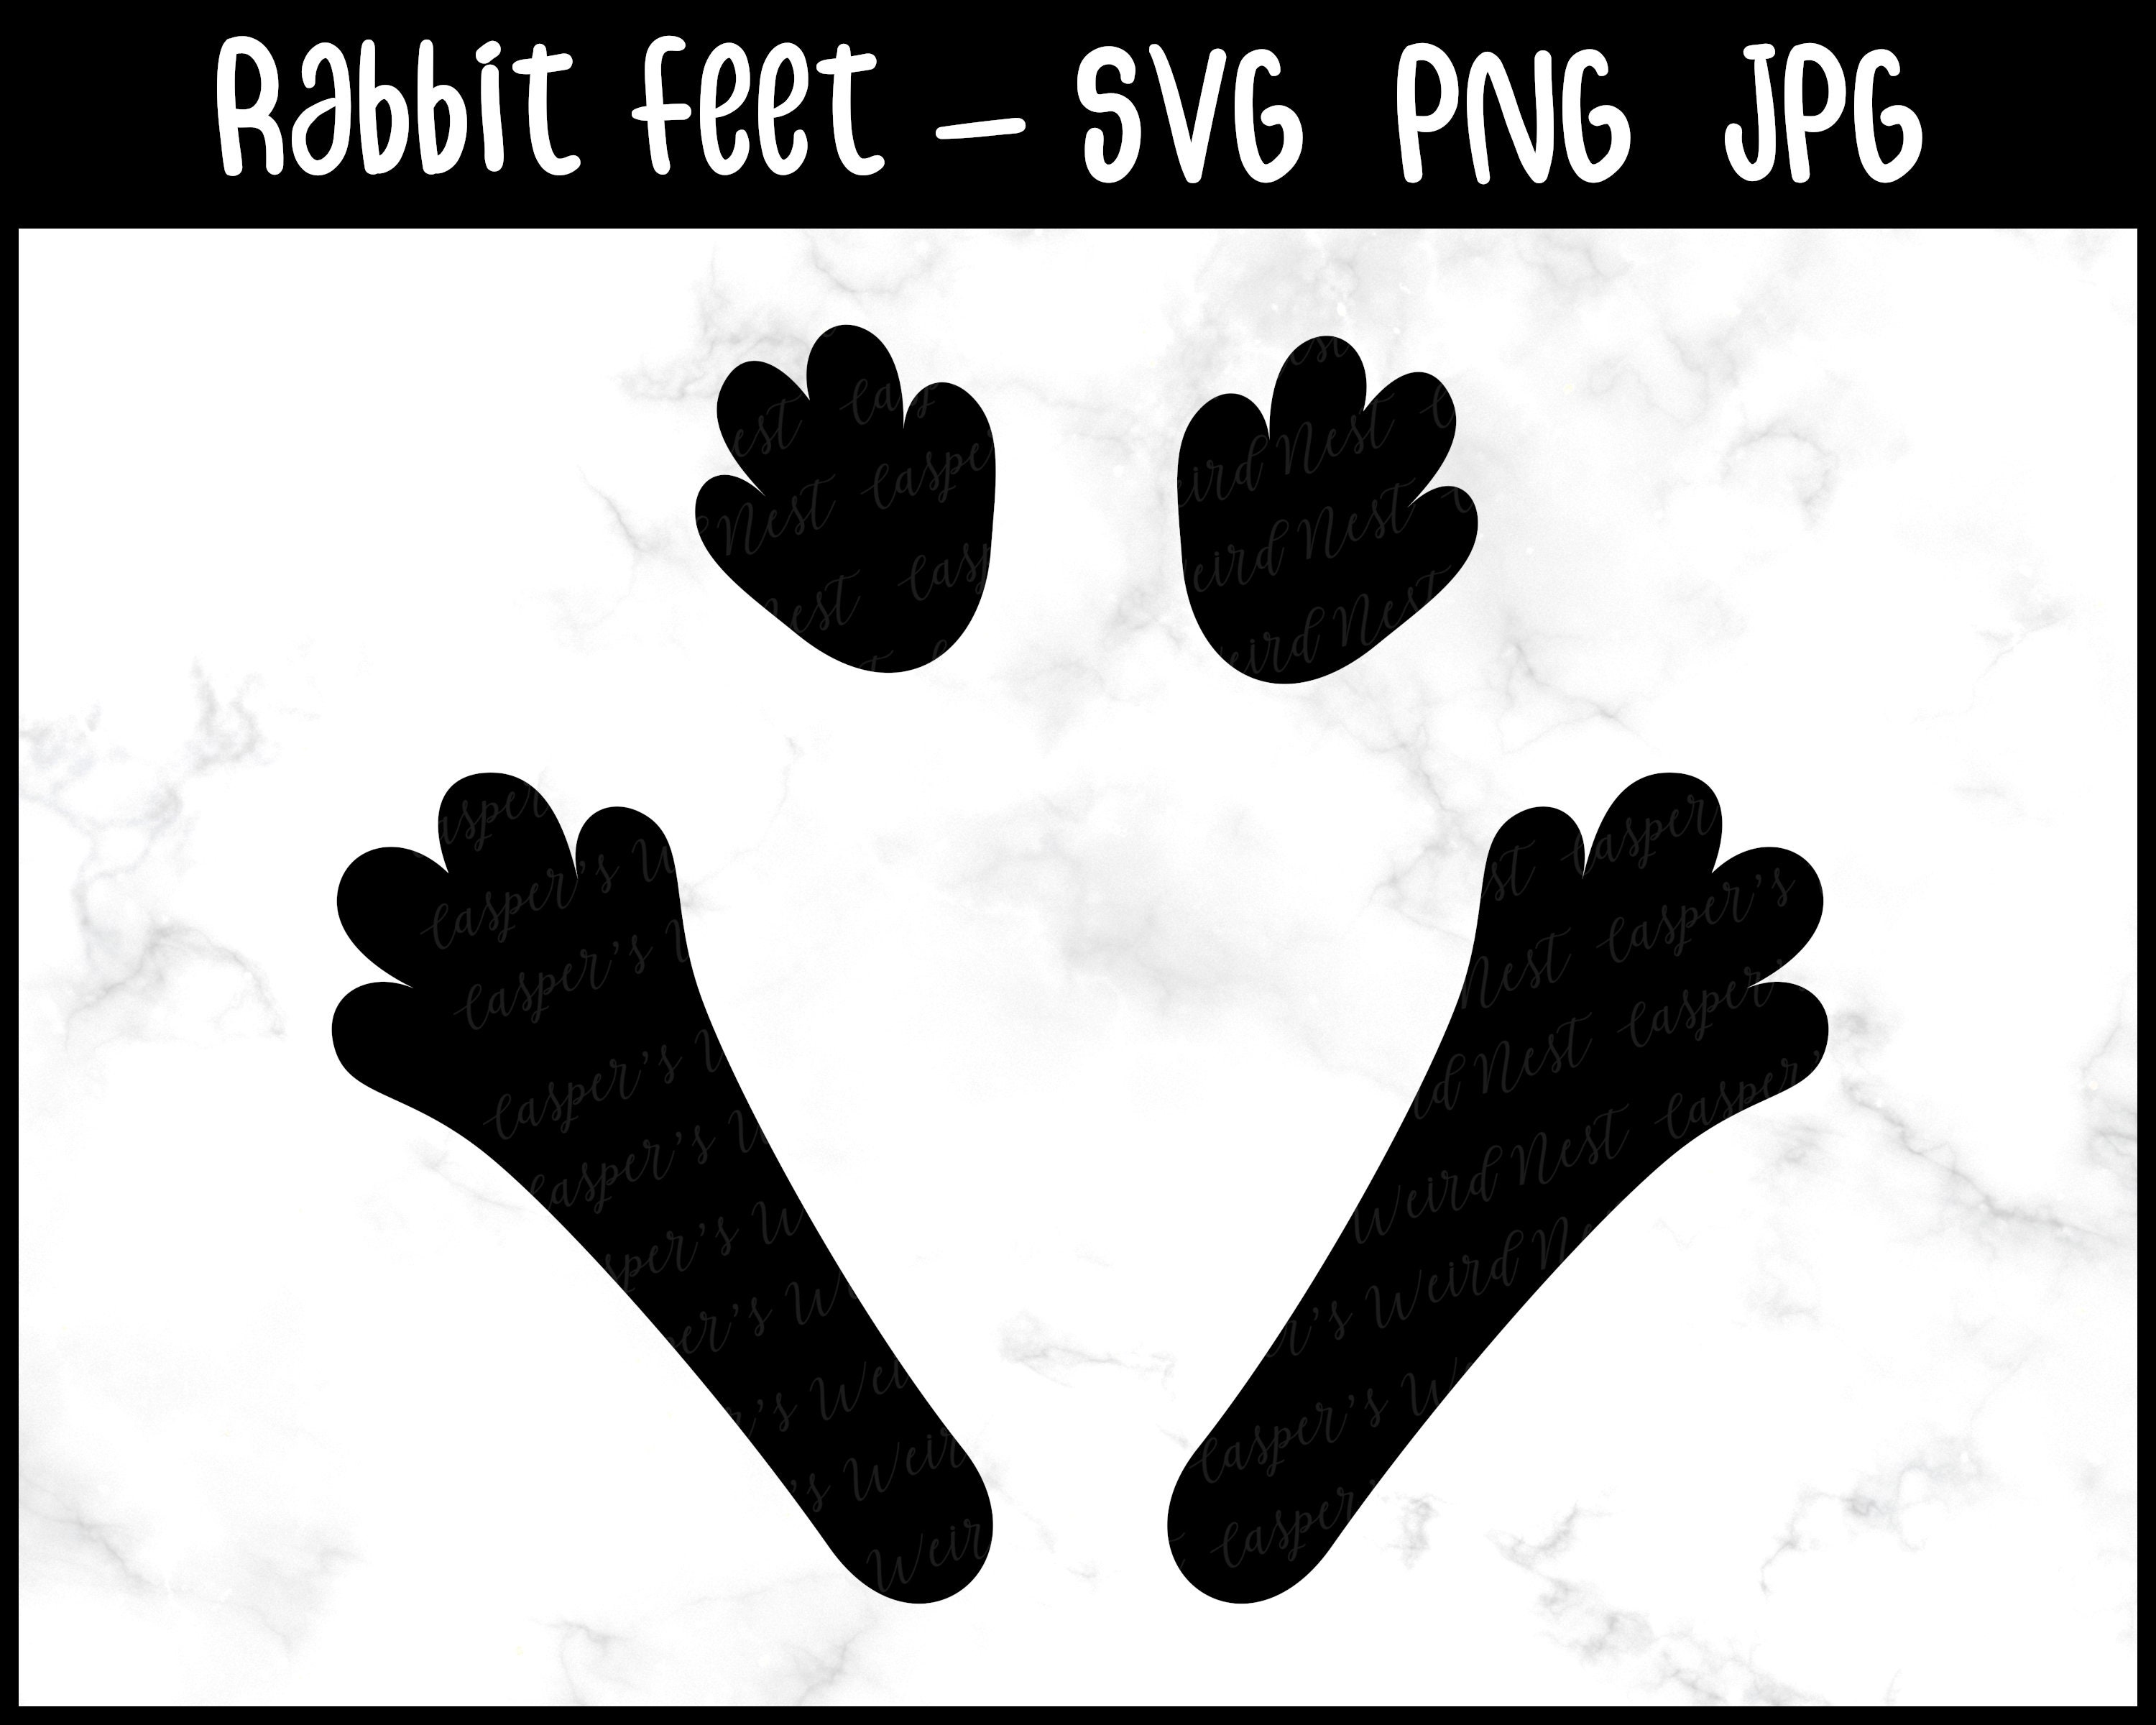 Rabbit footprints / pawprints SVG PNG JPG Commercial Use | Etsy